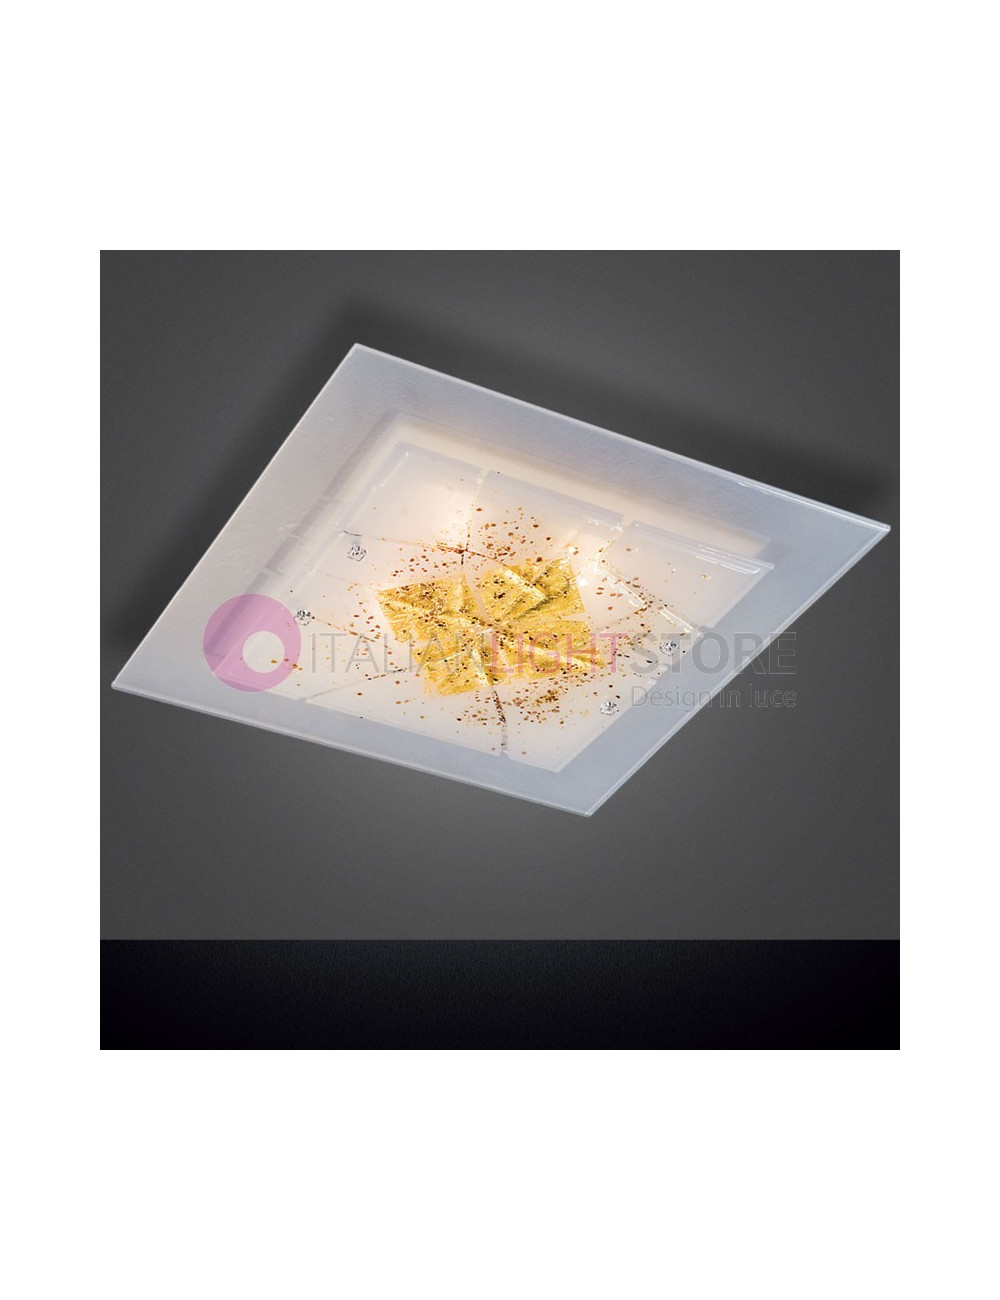 MIAMI ORO FAMILAMP de la luz de Techo de Cristal de Murano de 50x50